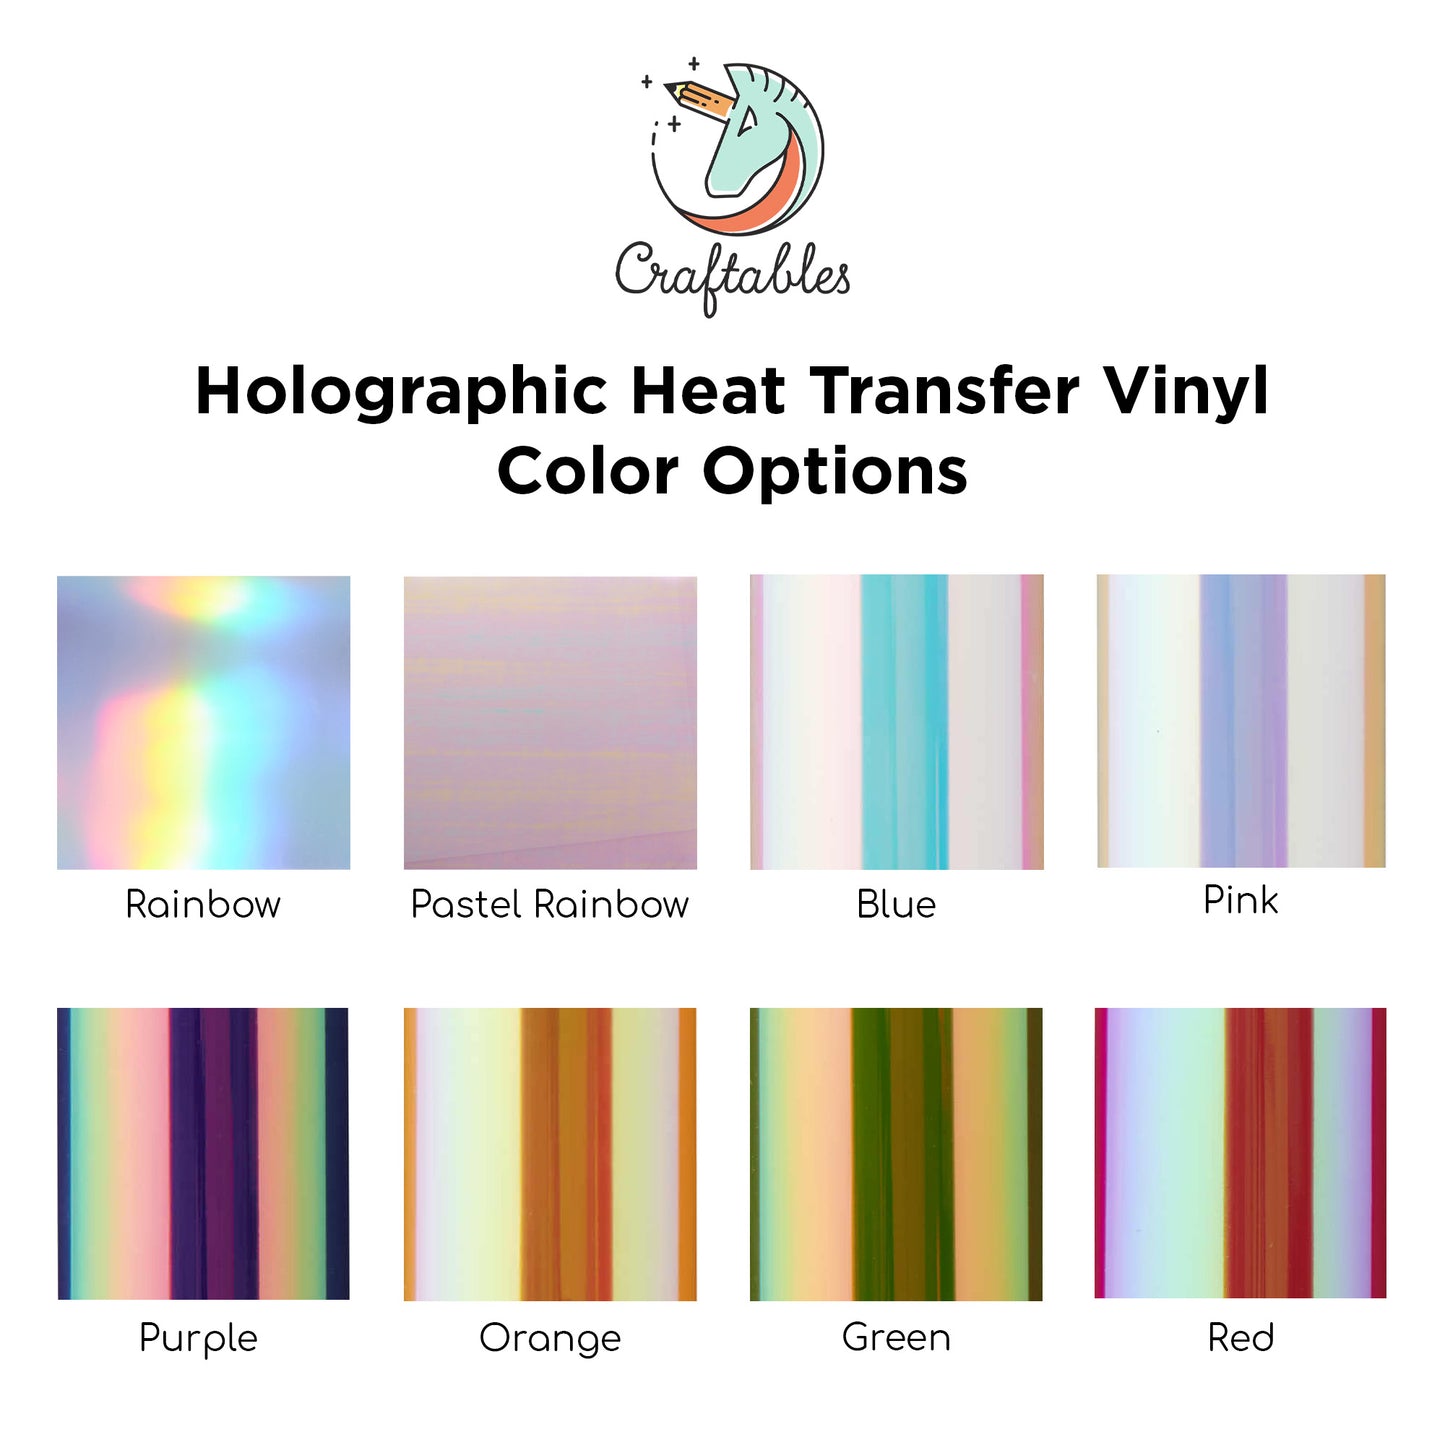 Purple Holographic Heat Transfer Vinyl Rolls By Craftables